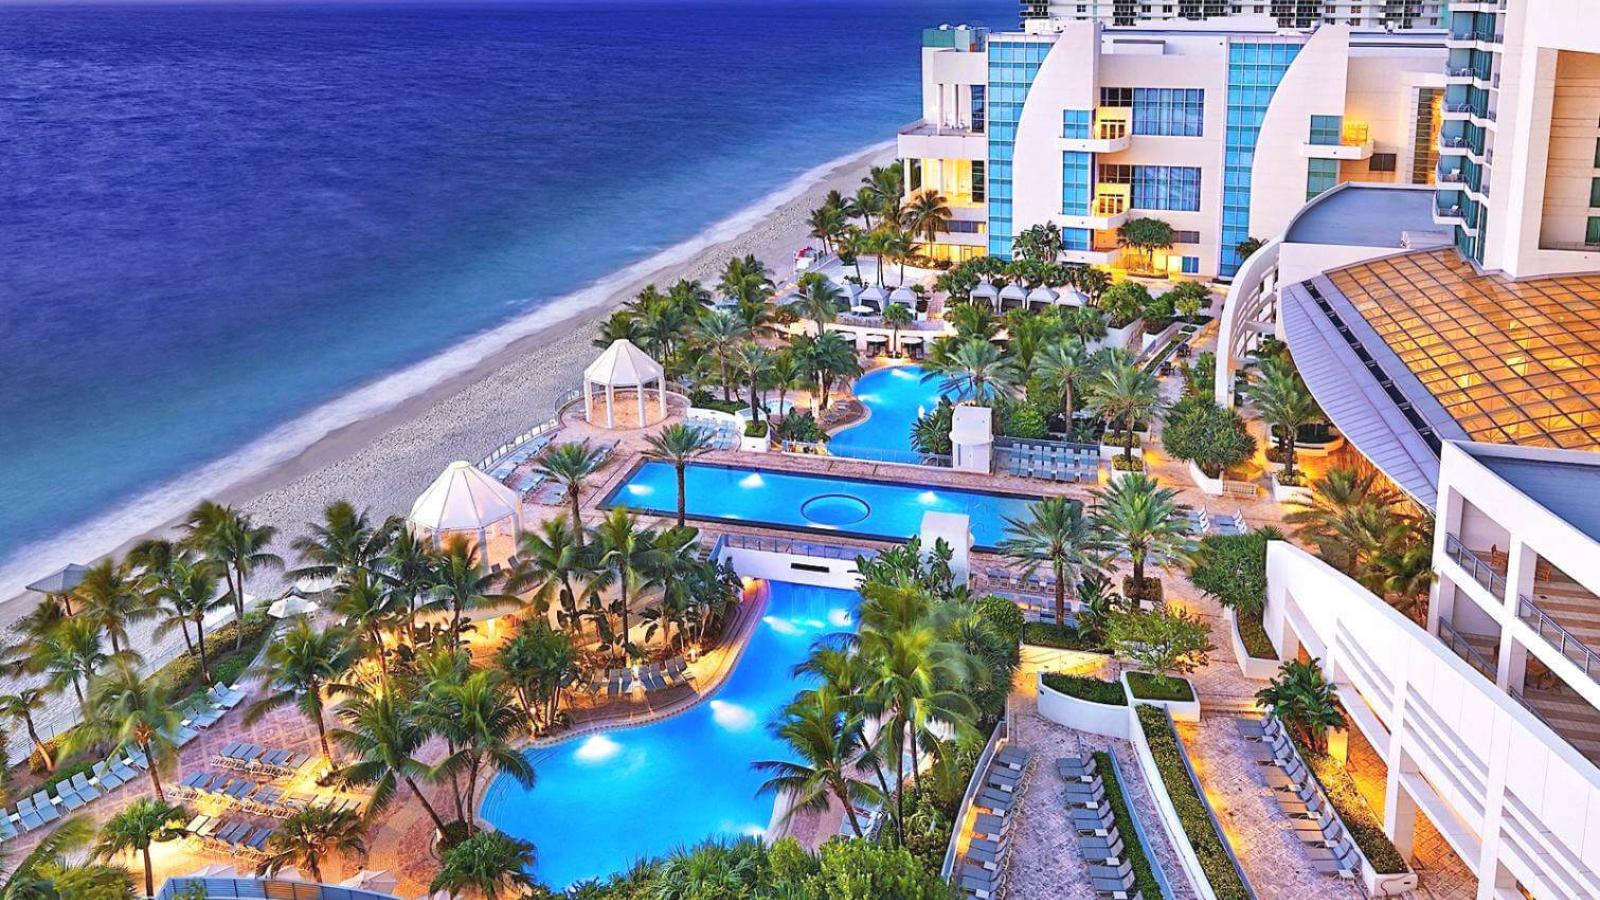 Beach and series of swimming pools at Florida resort hotel